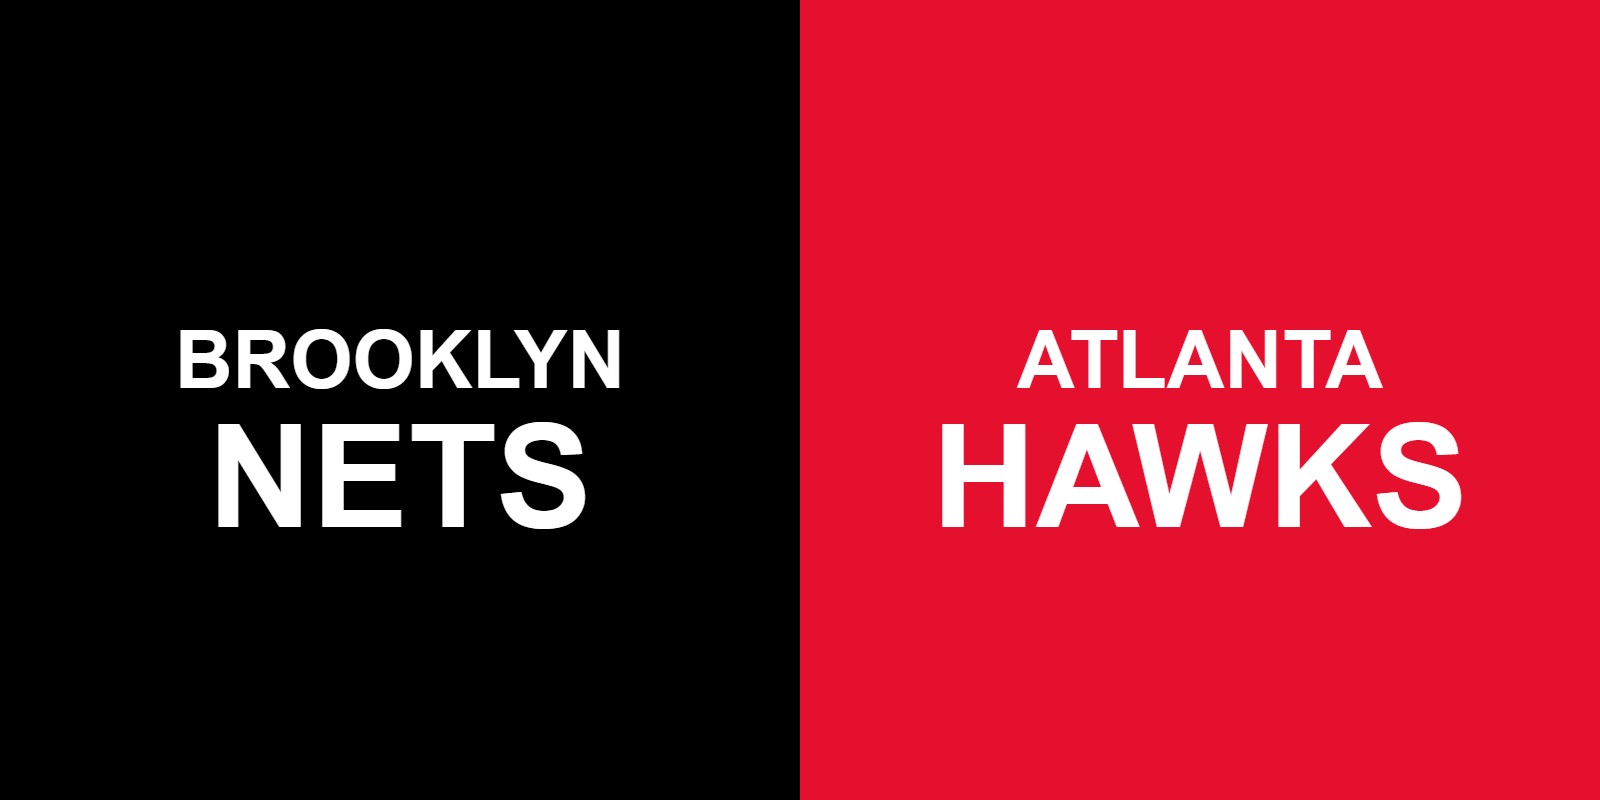 Nets vs Hawks Tickets - RateYourSeats.com